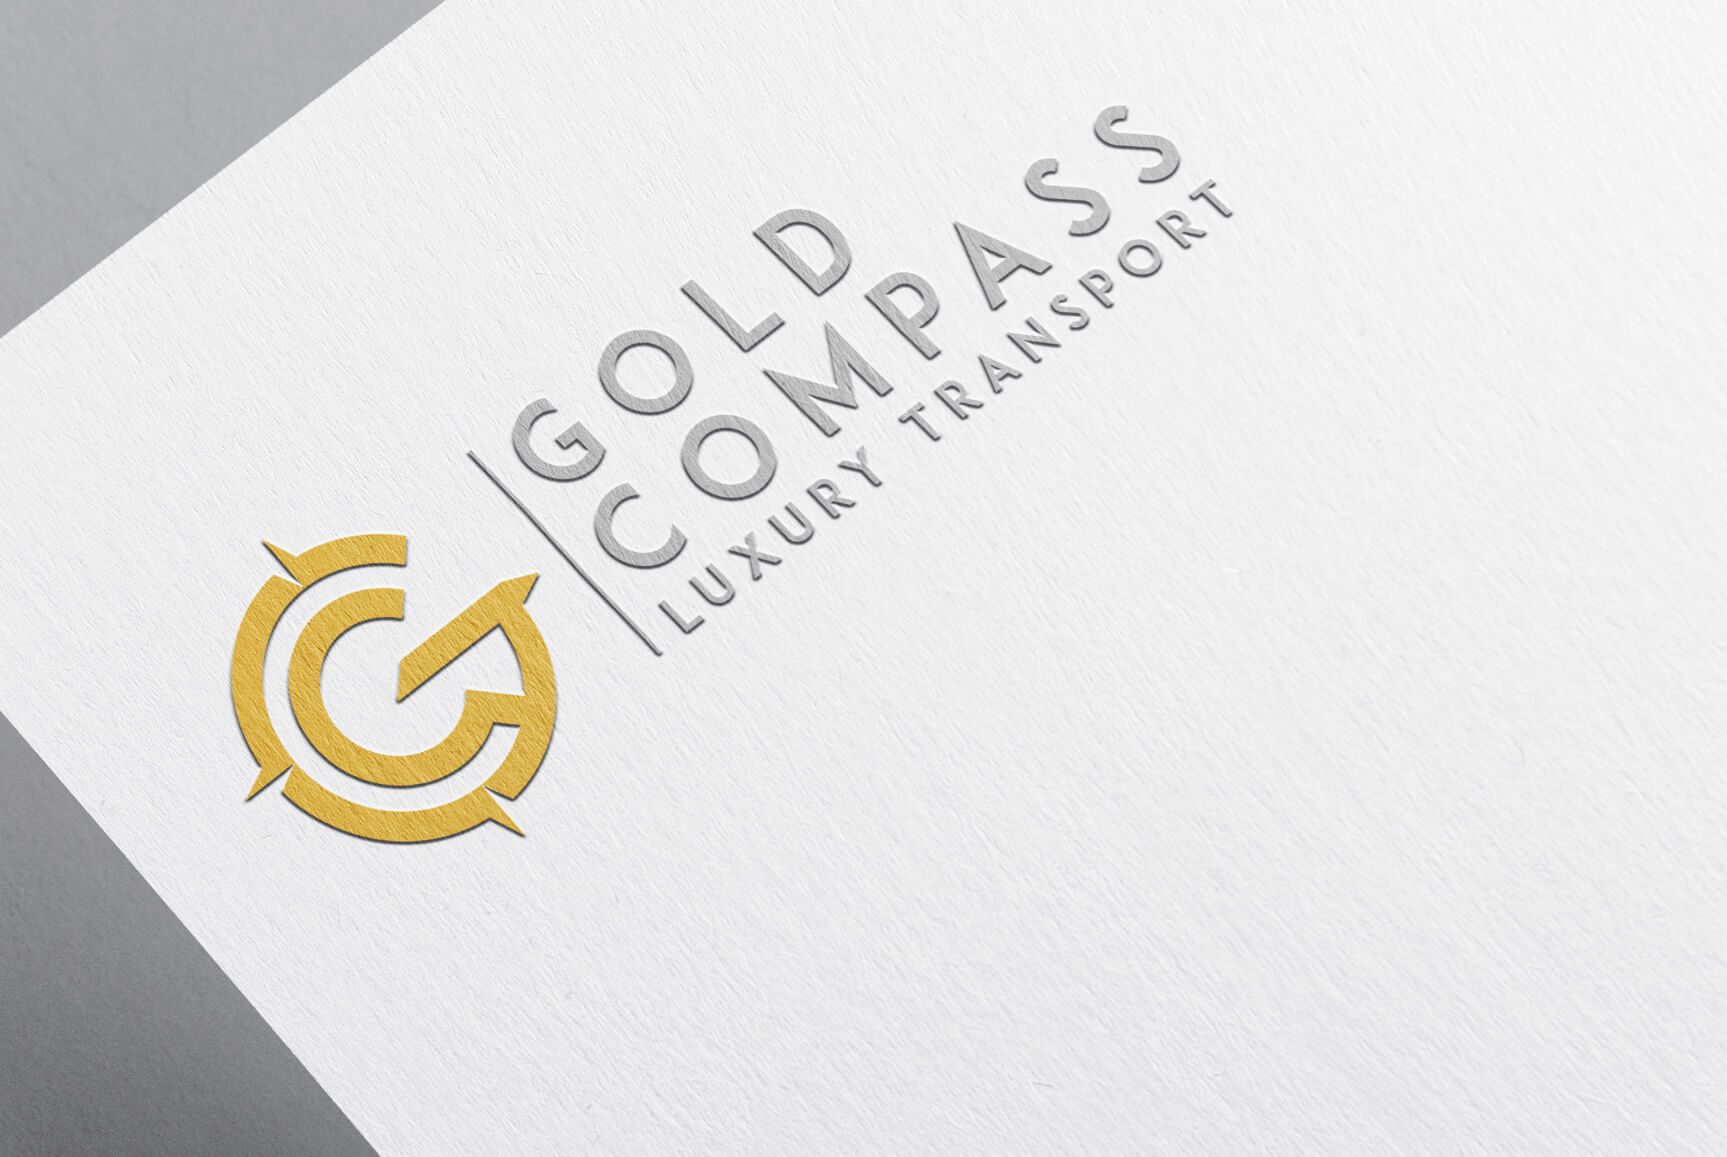 Redesign da Identidade visual da empresa Gold Compass